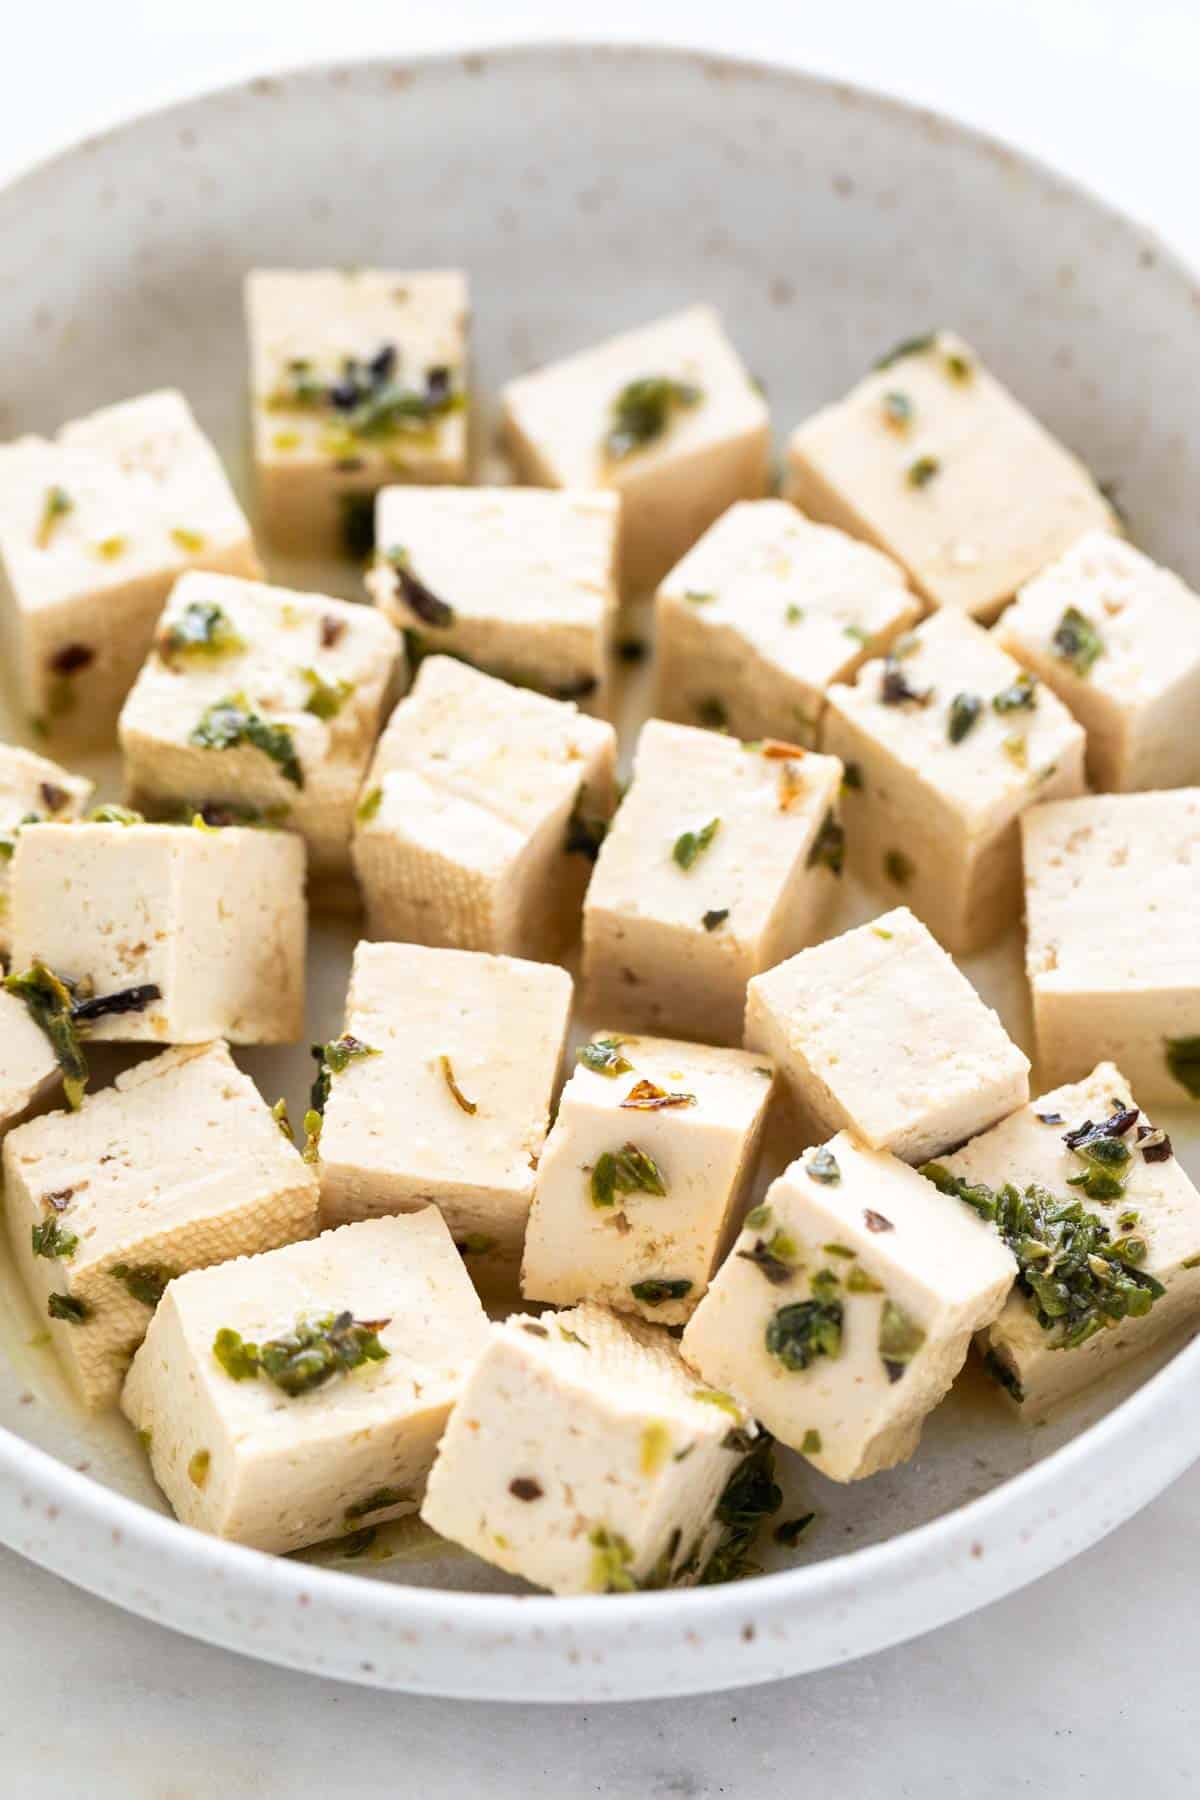 Tofu feta cheese in a dish.